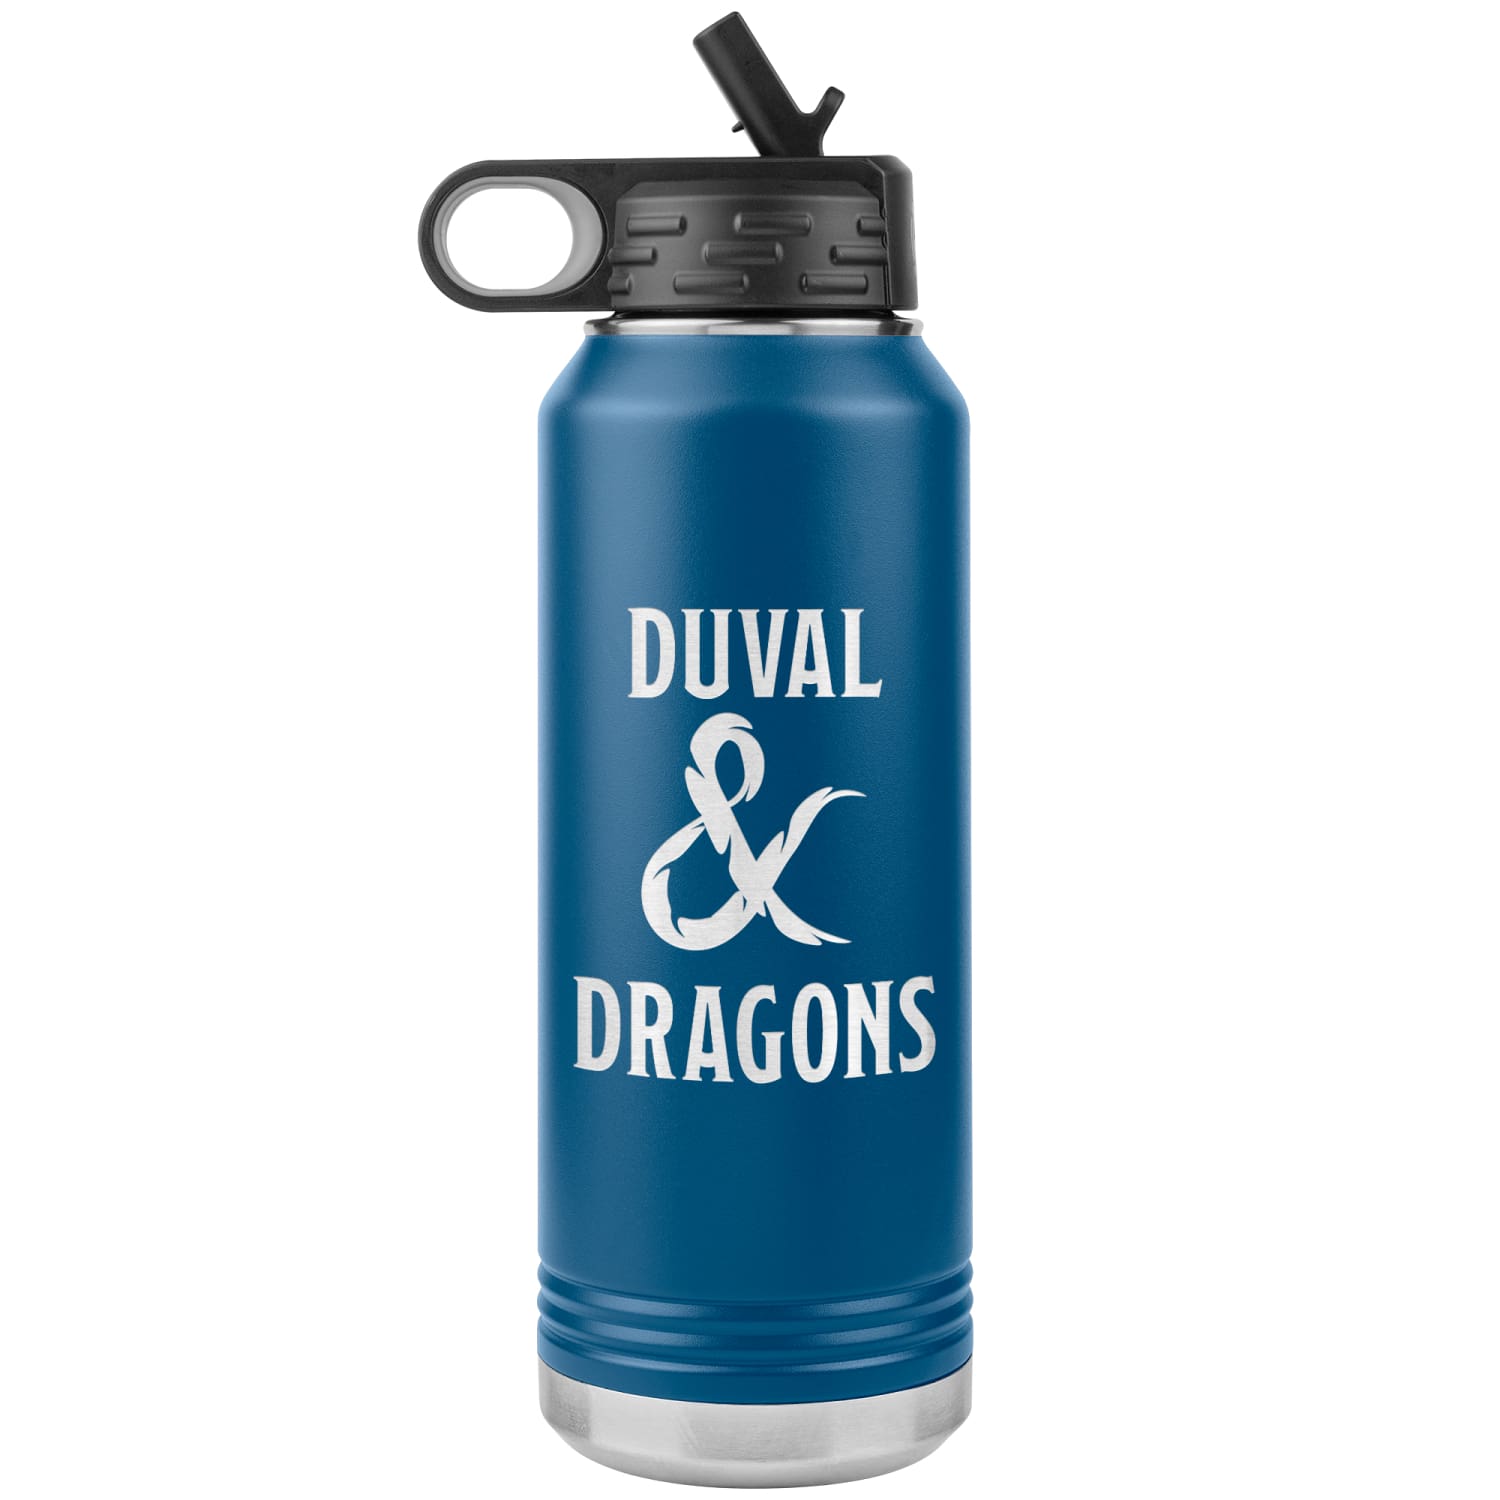 Duval & Dragons Logo 32oz Water Bottle Tumbler - Blue - Tumblers